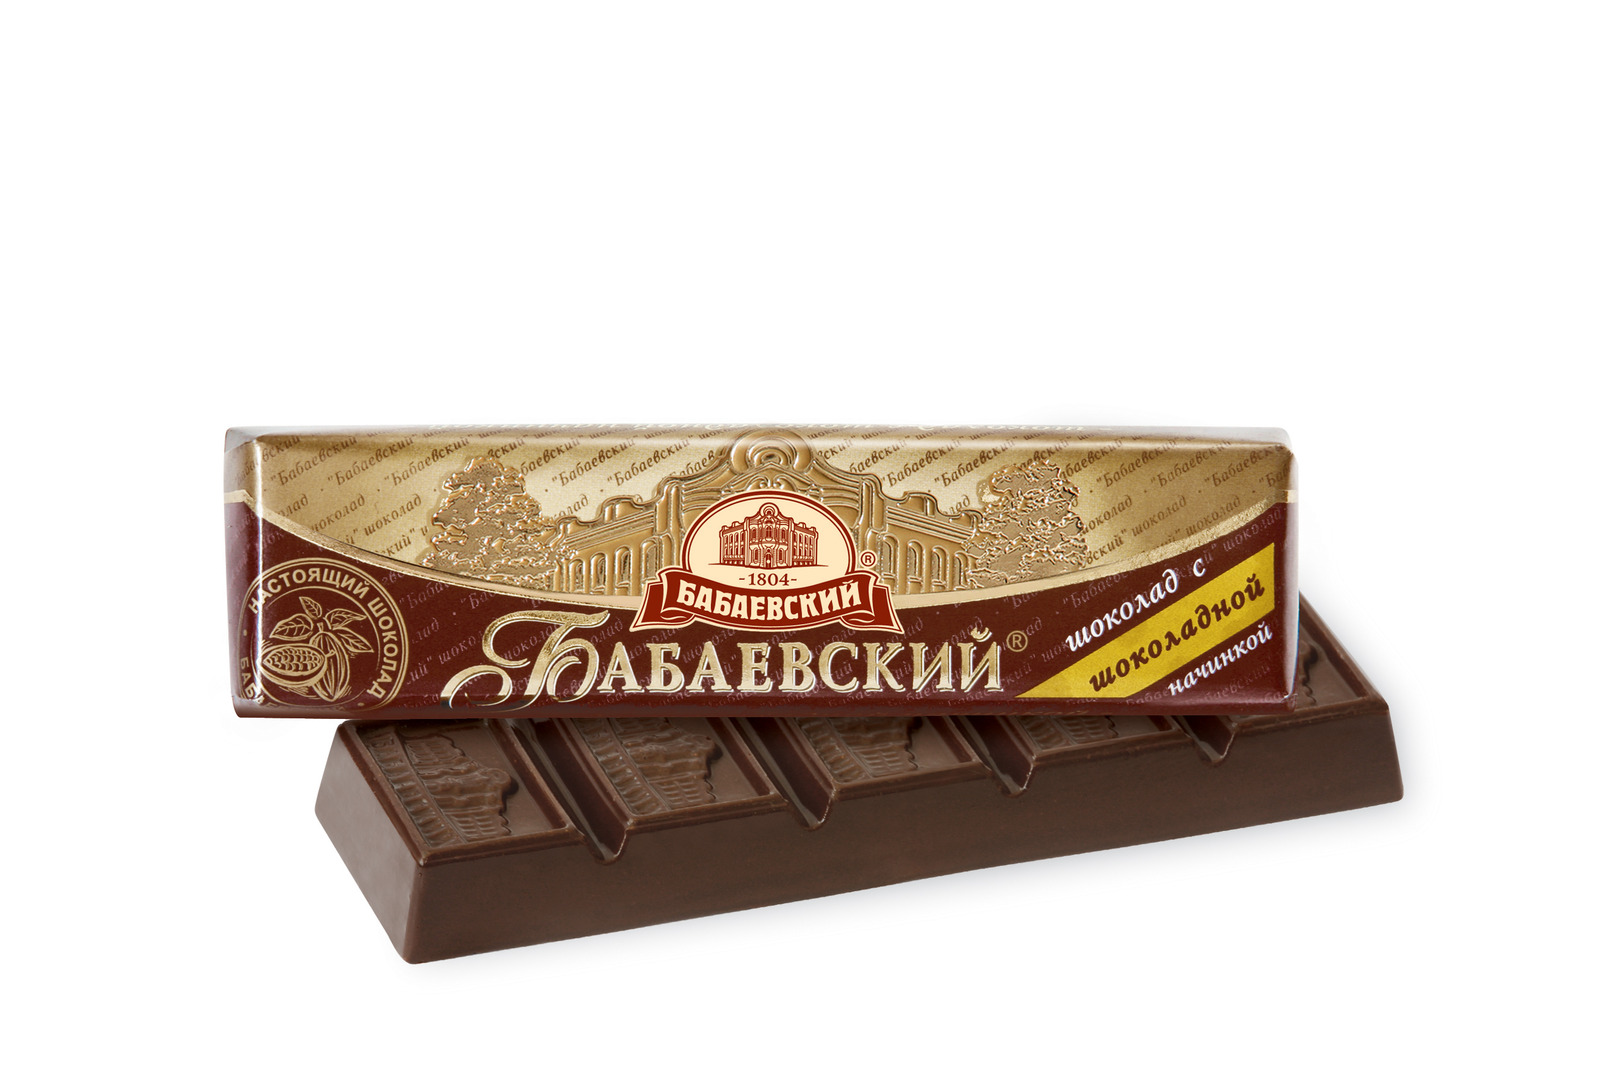 Babaevsky Chocolate Bar Chocolate Filling 50g.jpg (1)